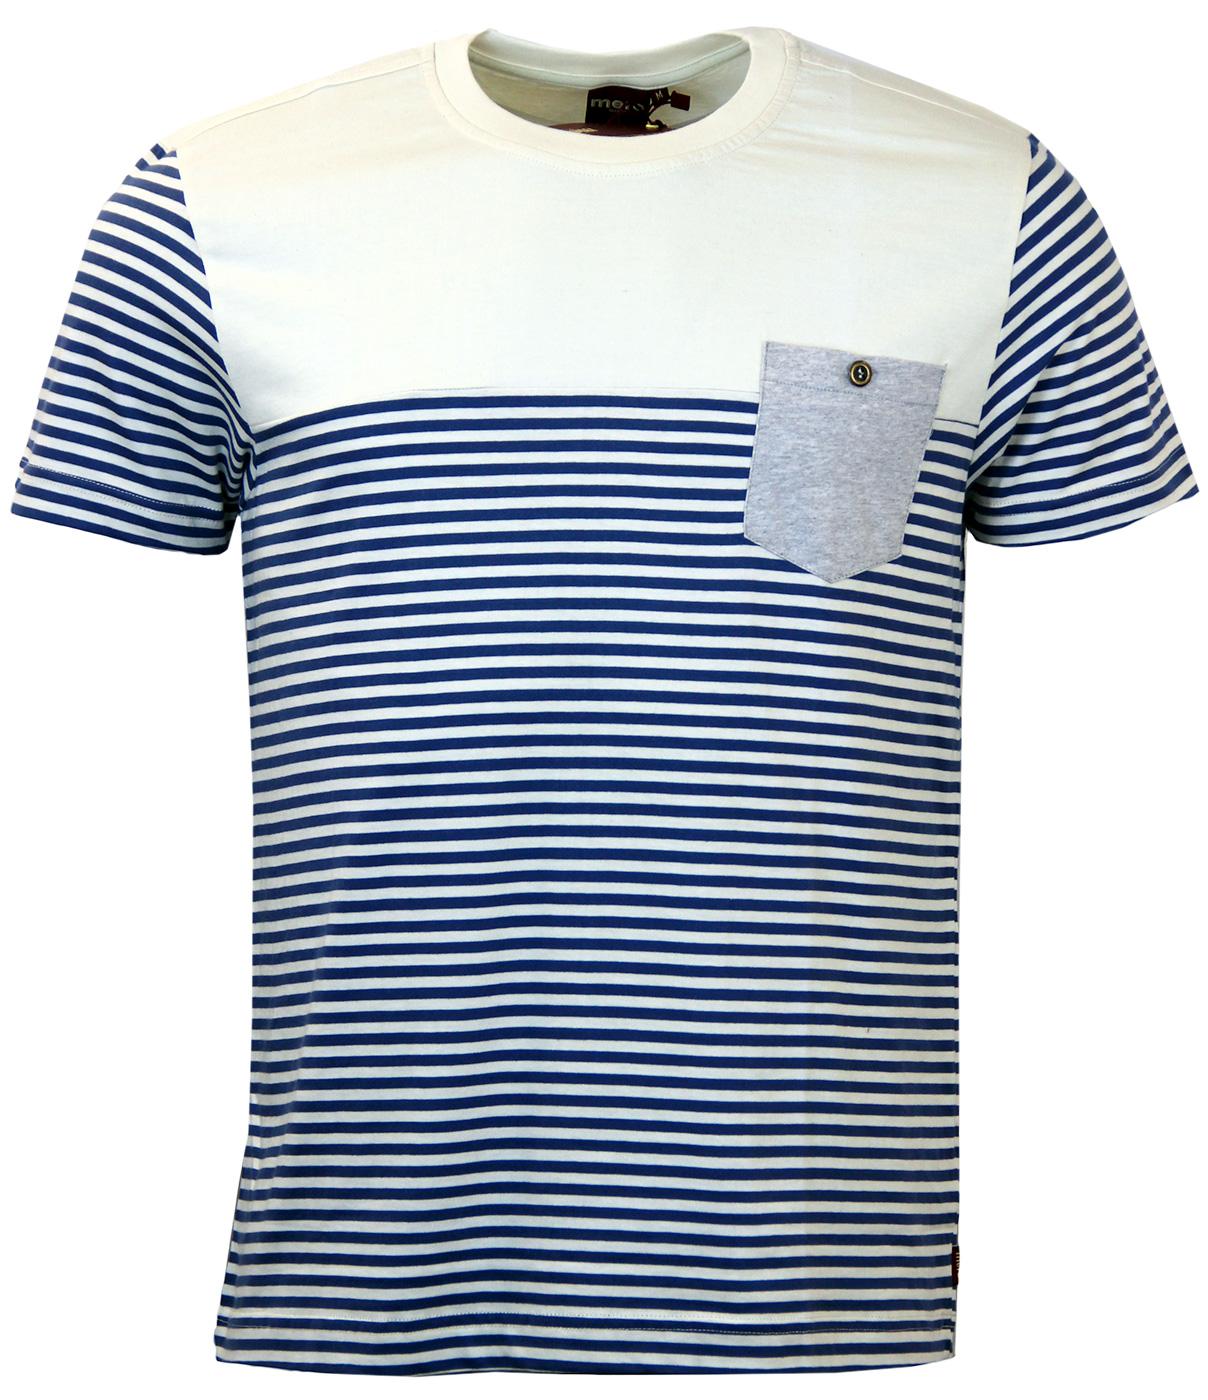 Reuben MERC Retro 60s Nautical Stripe Mod T-Shirt